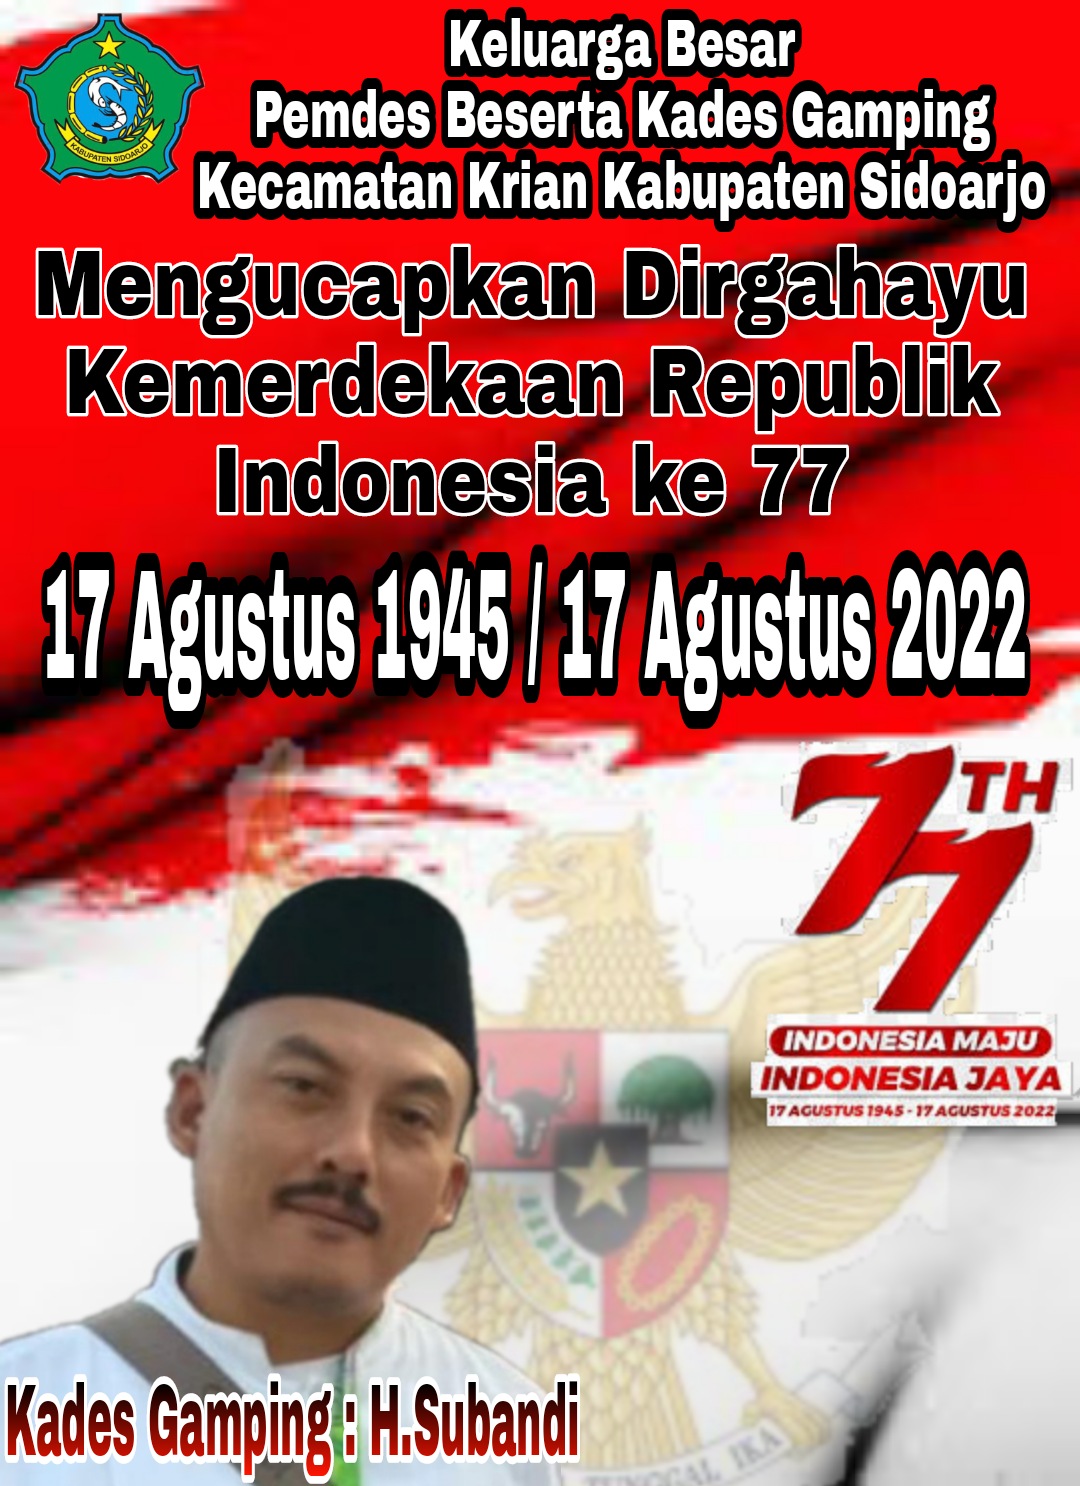 Keluarga Besar Pemdes Beserta Kades Gamping Megucapkan Dirgahayu Kemerdekaan Republik Indonesia ke 77 Tanggal 17 Agustus 1945 / 17 Agustus 2022